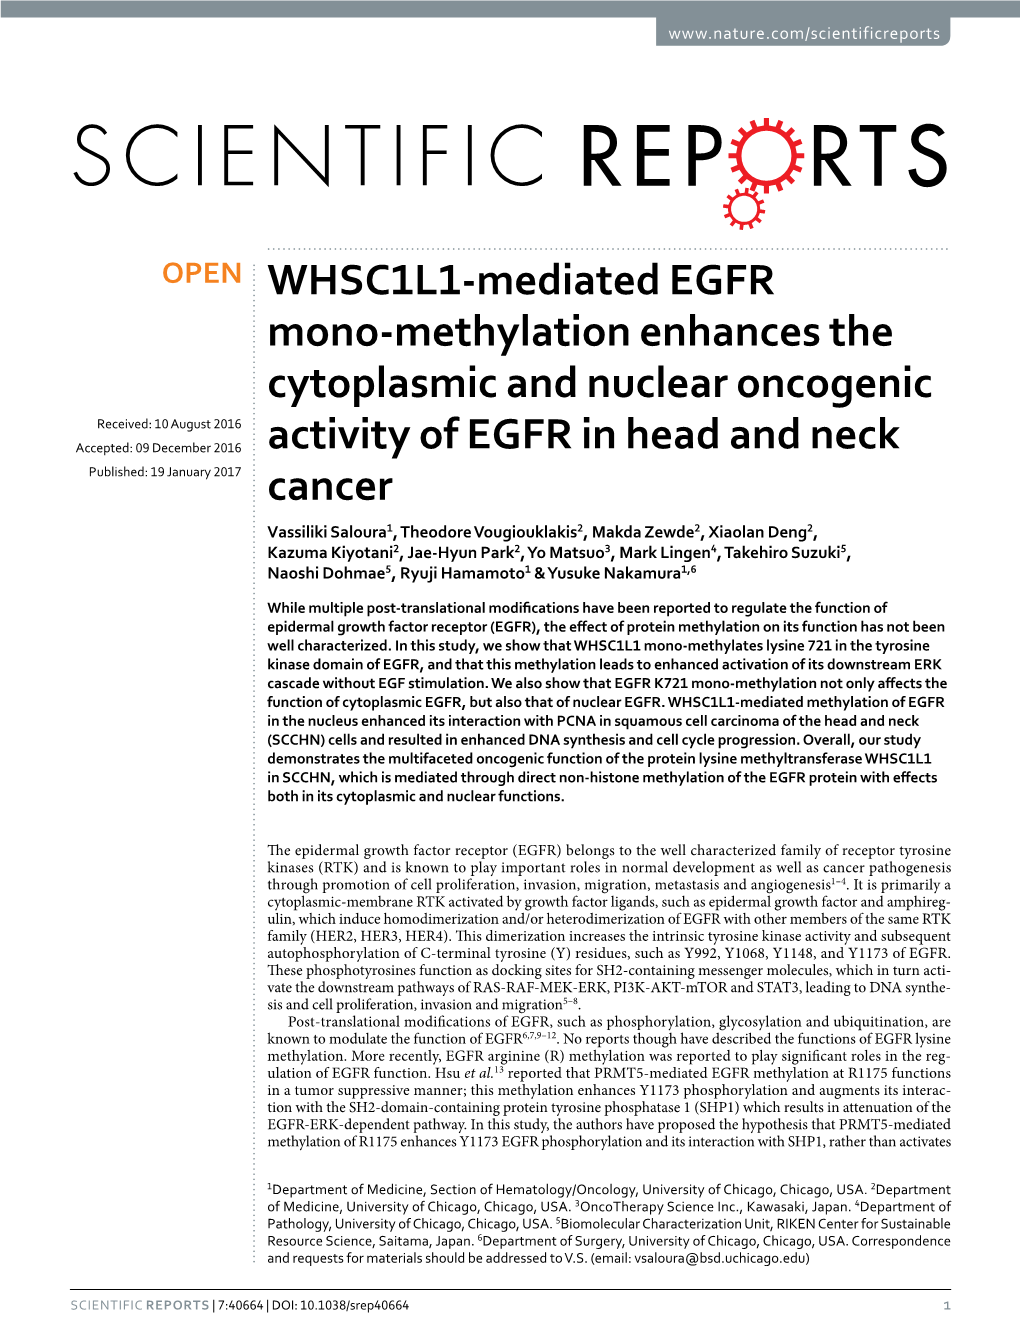 WHSC1L1-Mediated EGFR Mono-Methylation Enhances The